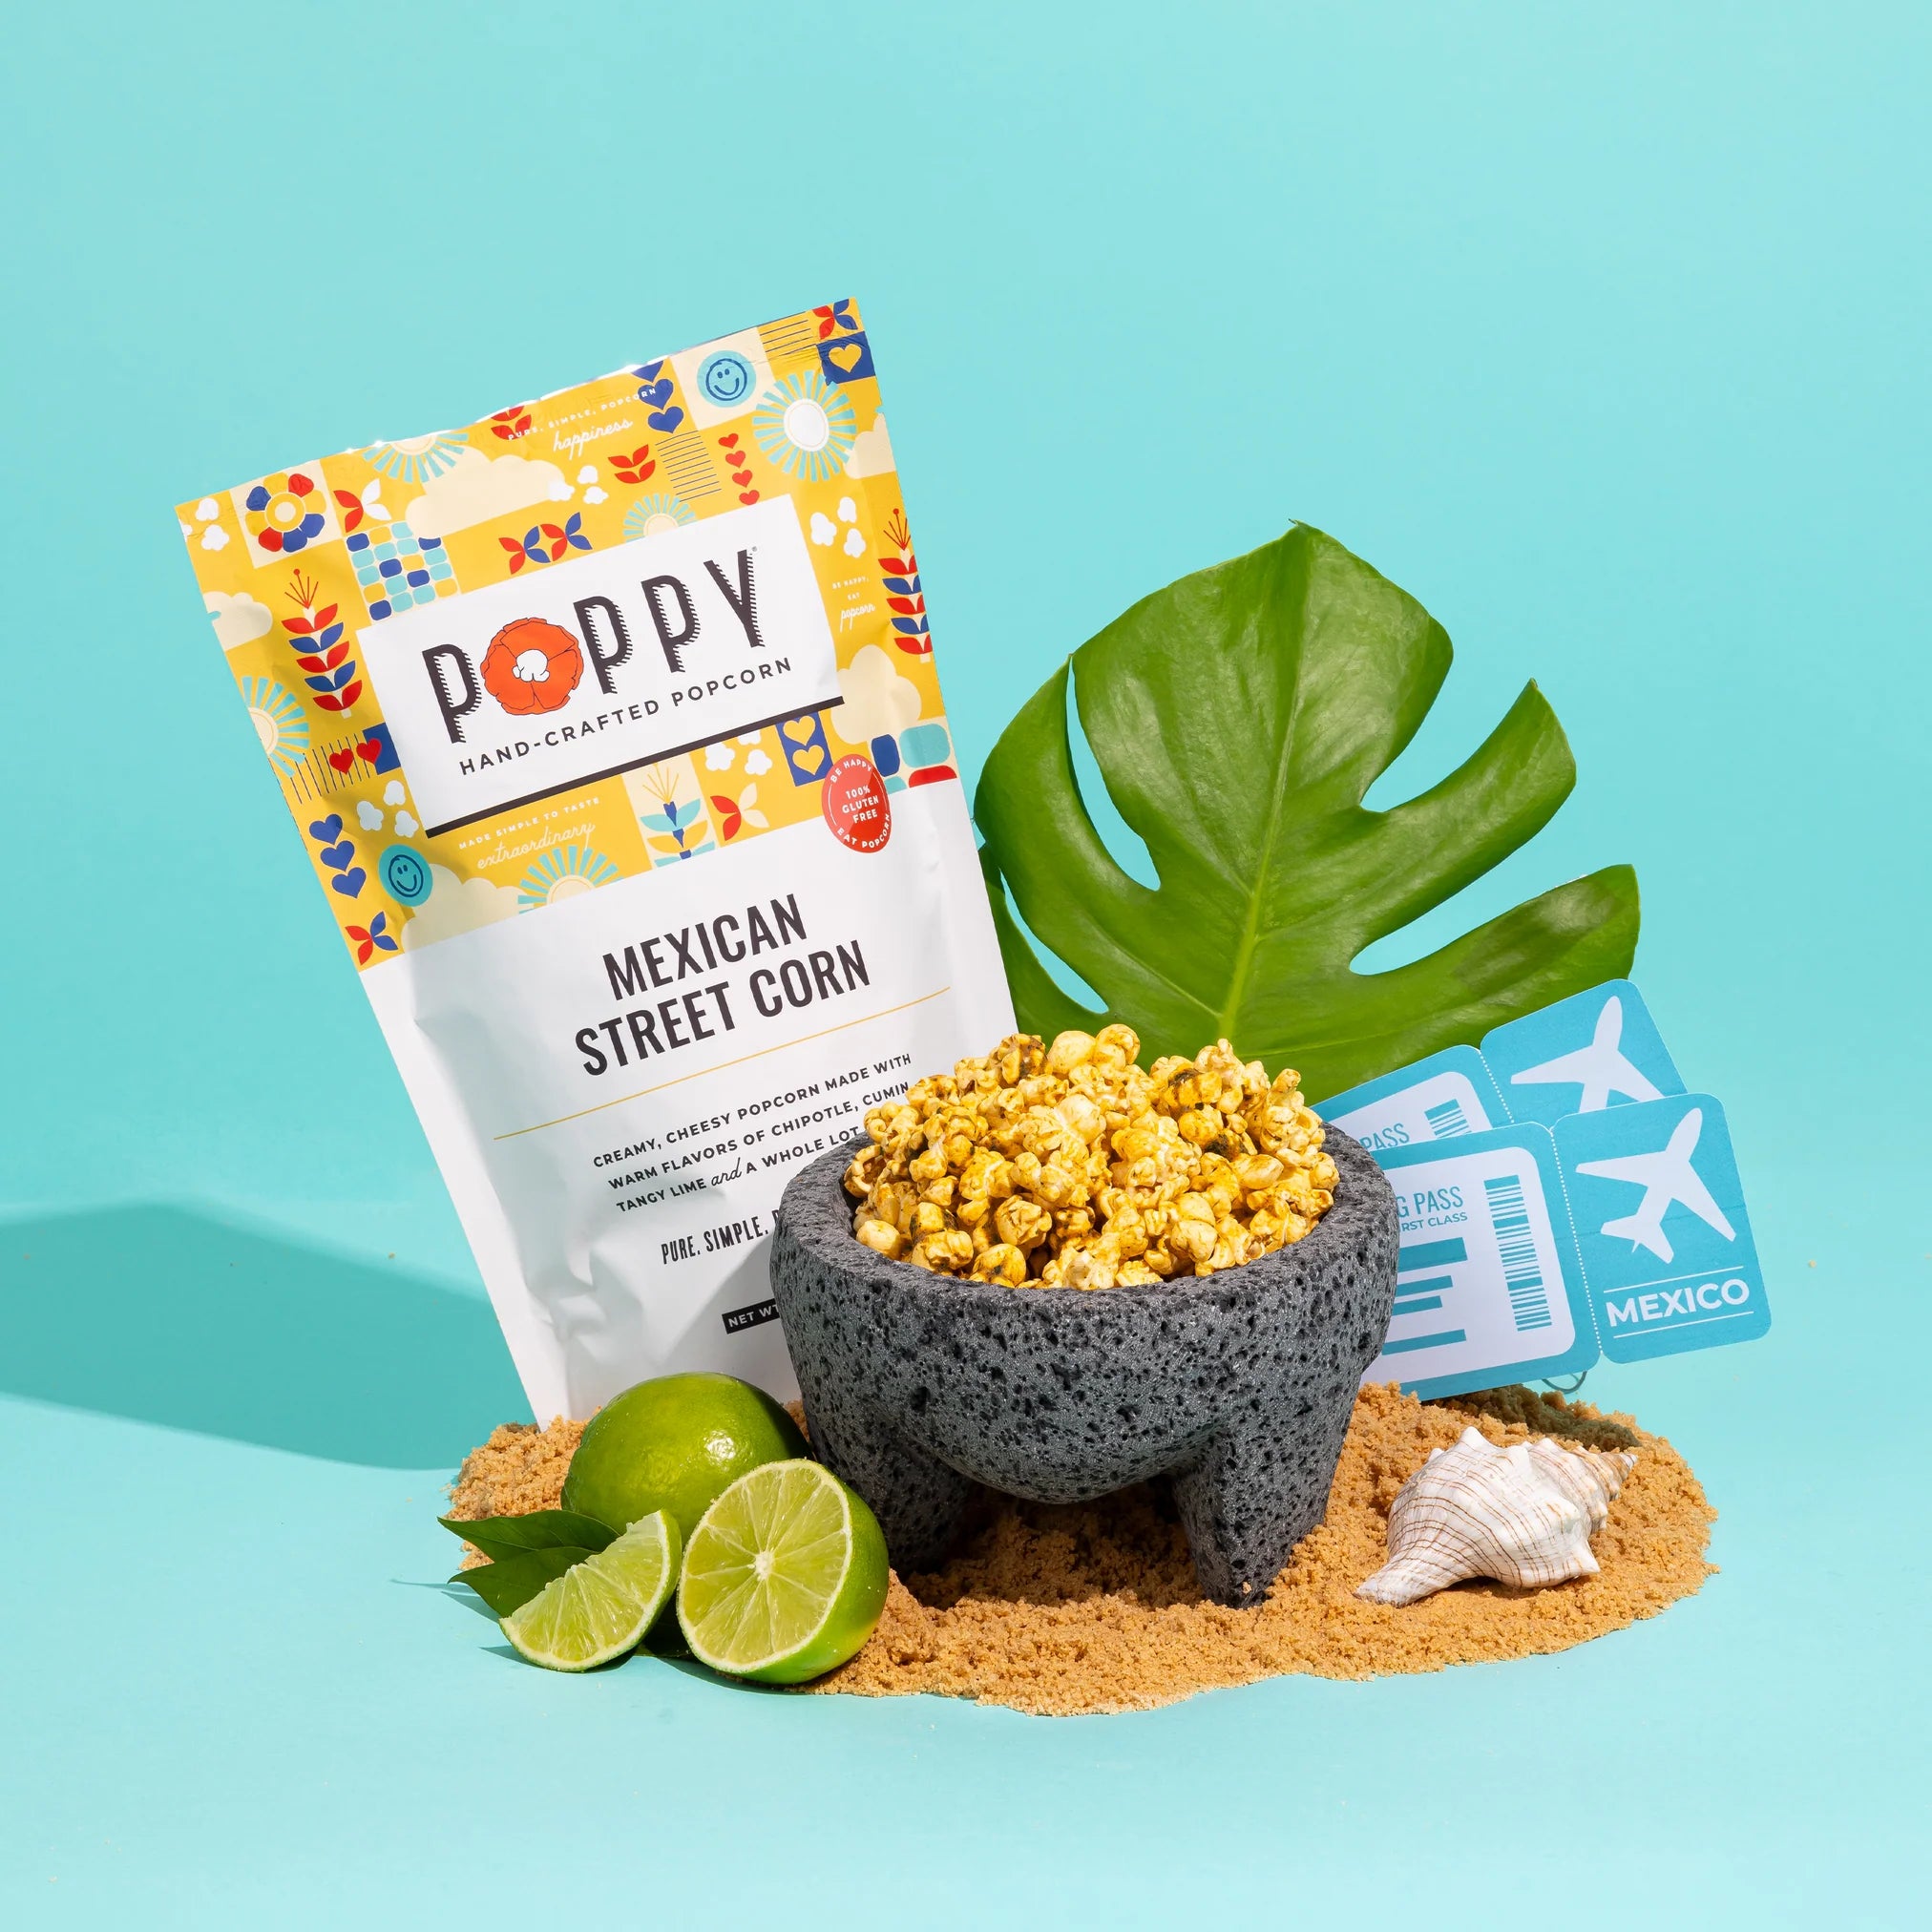 Poppy Popcorn - Mexican Street Corn